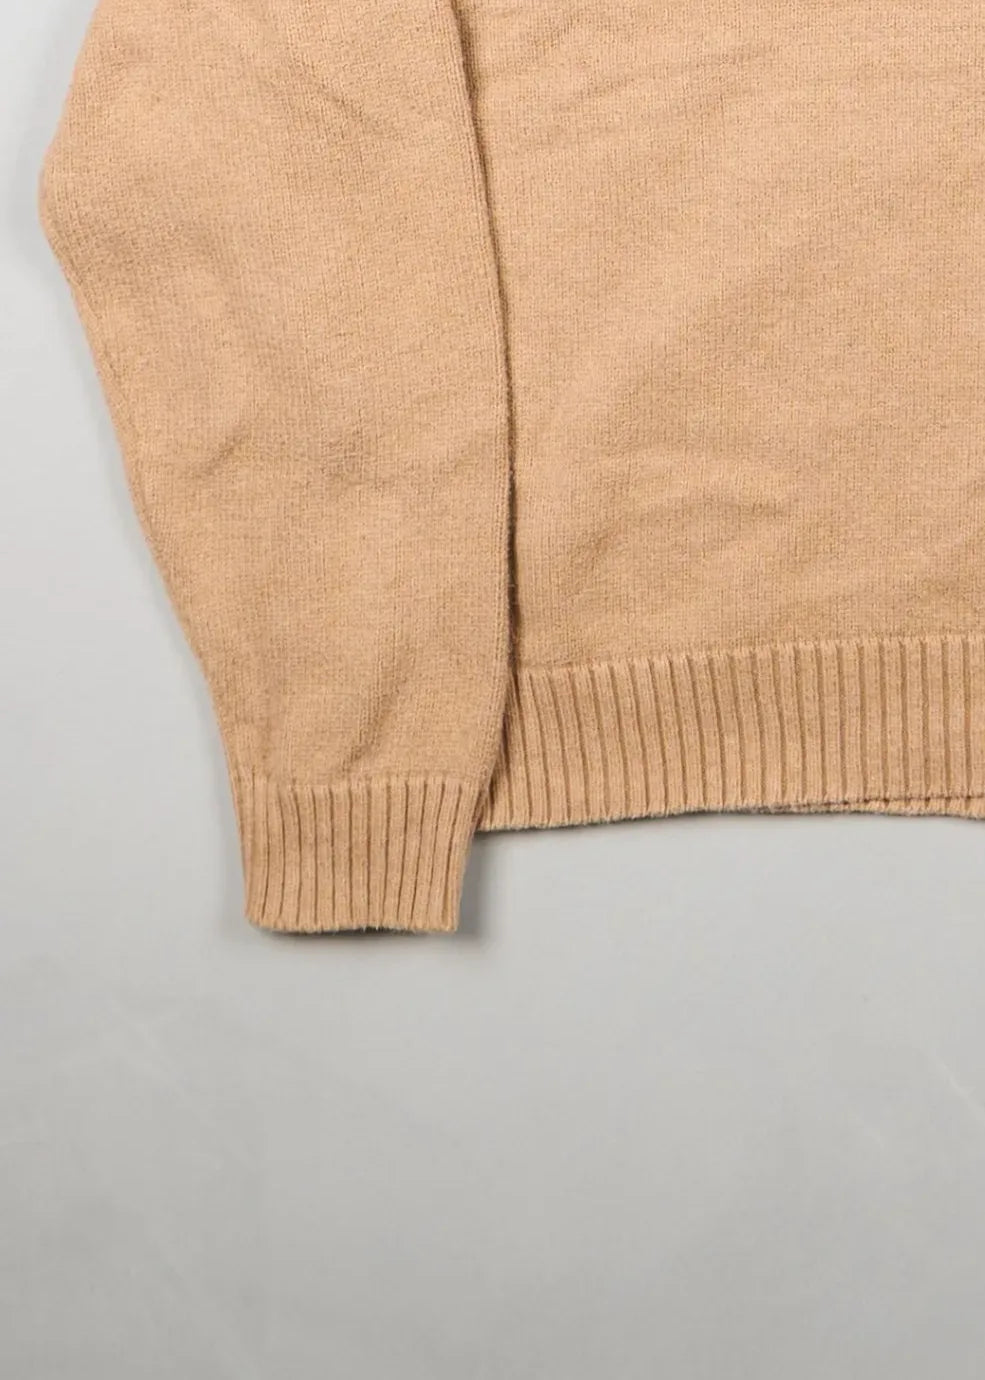 Ralph Lauren - Sweater (M) Bottom Left